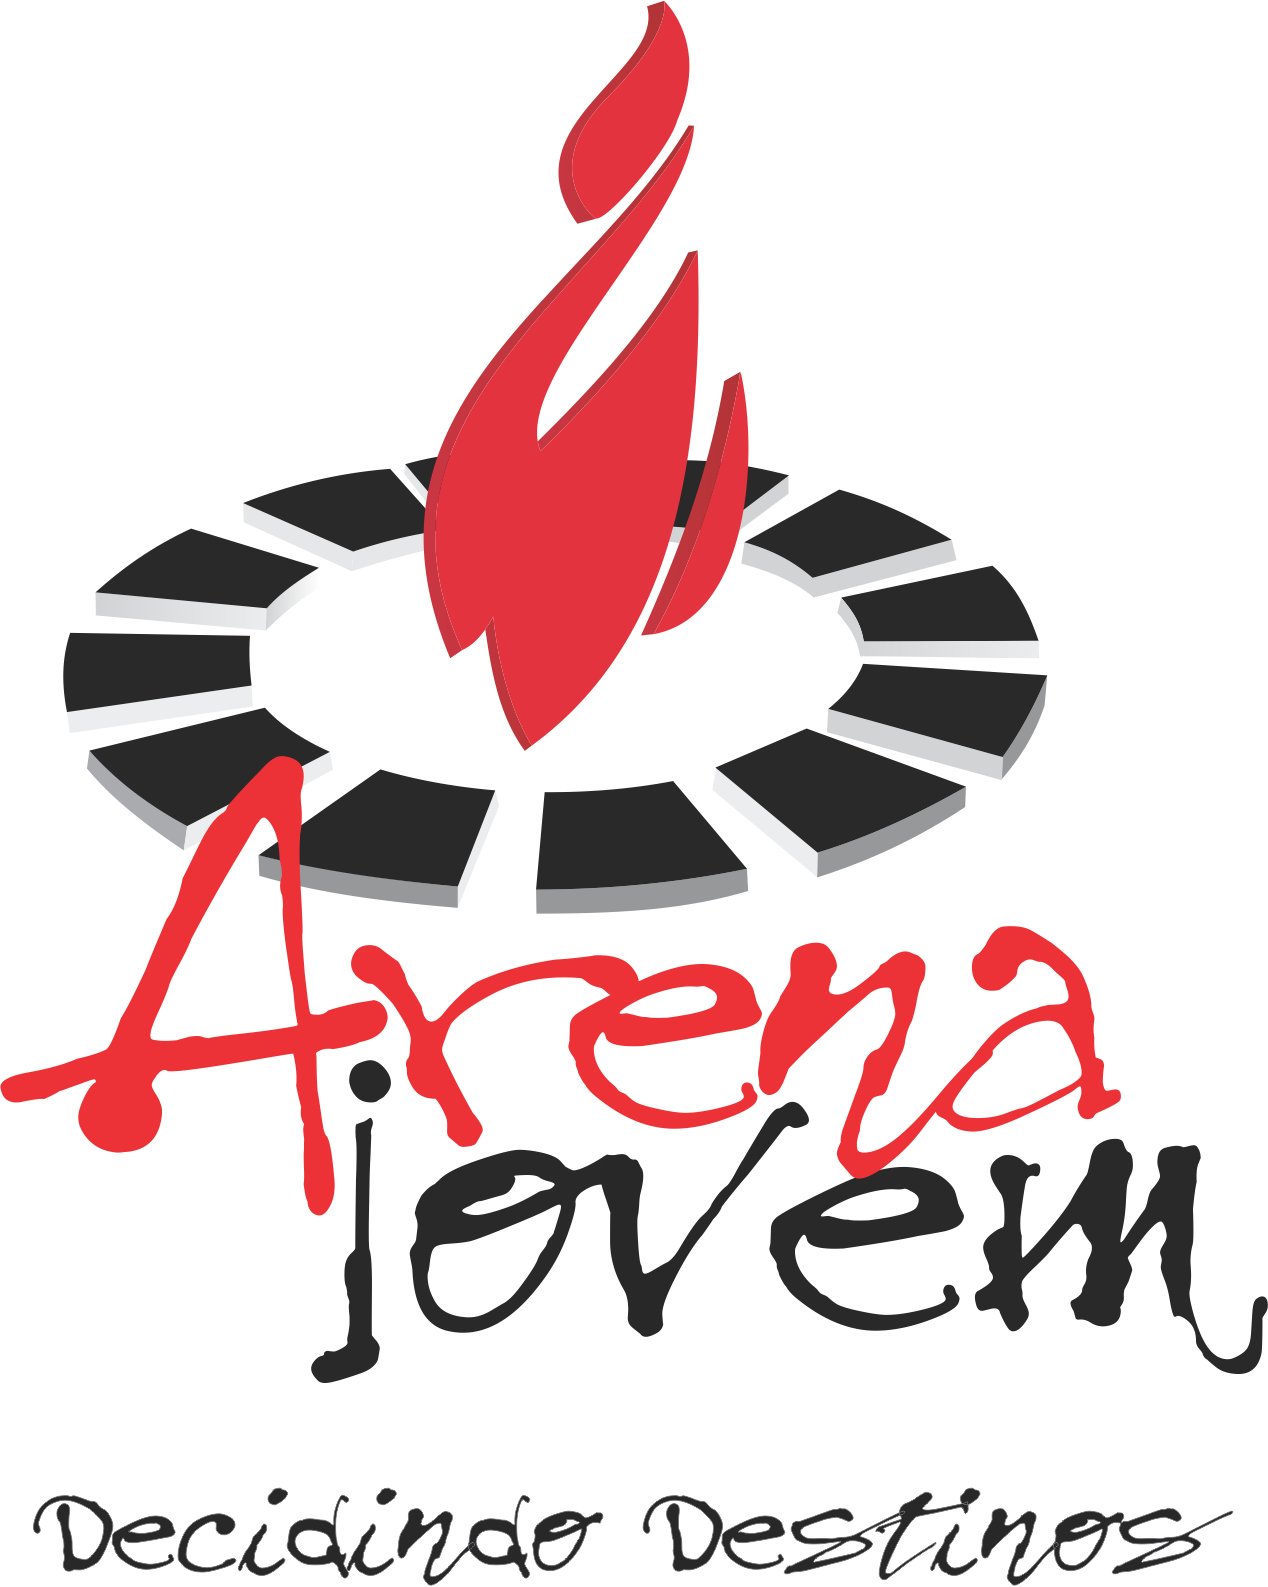 Arena logo and slogan Water I